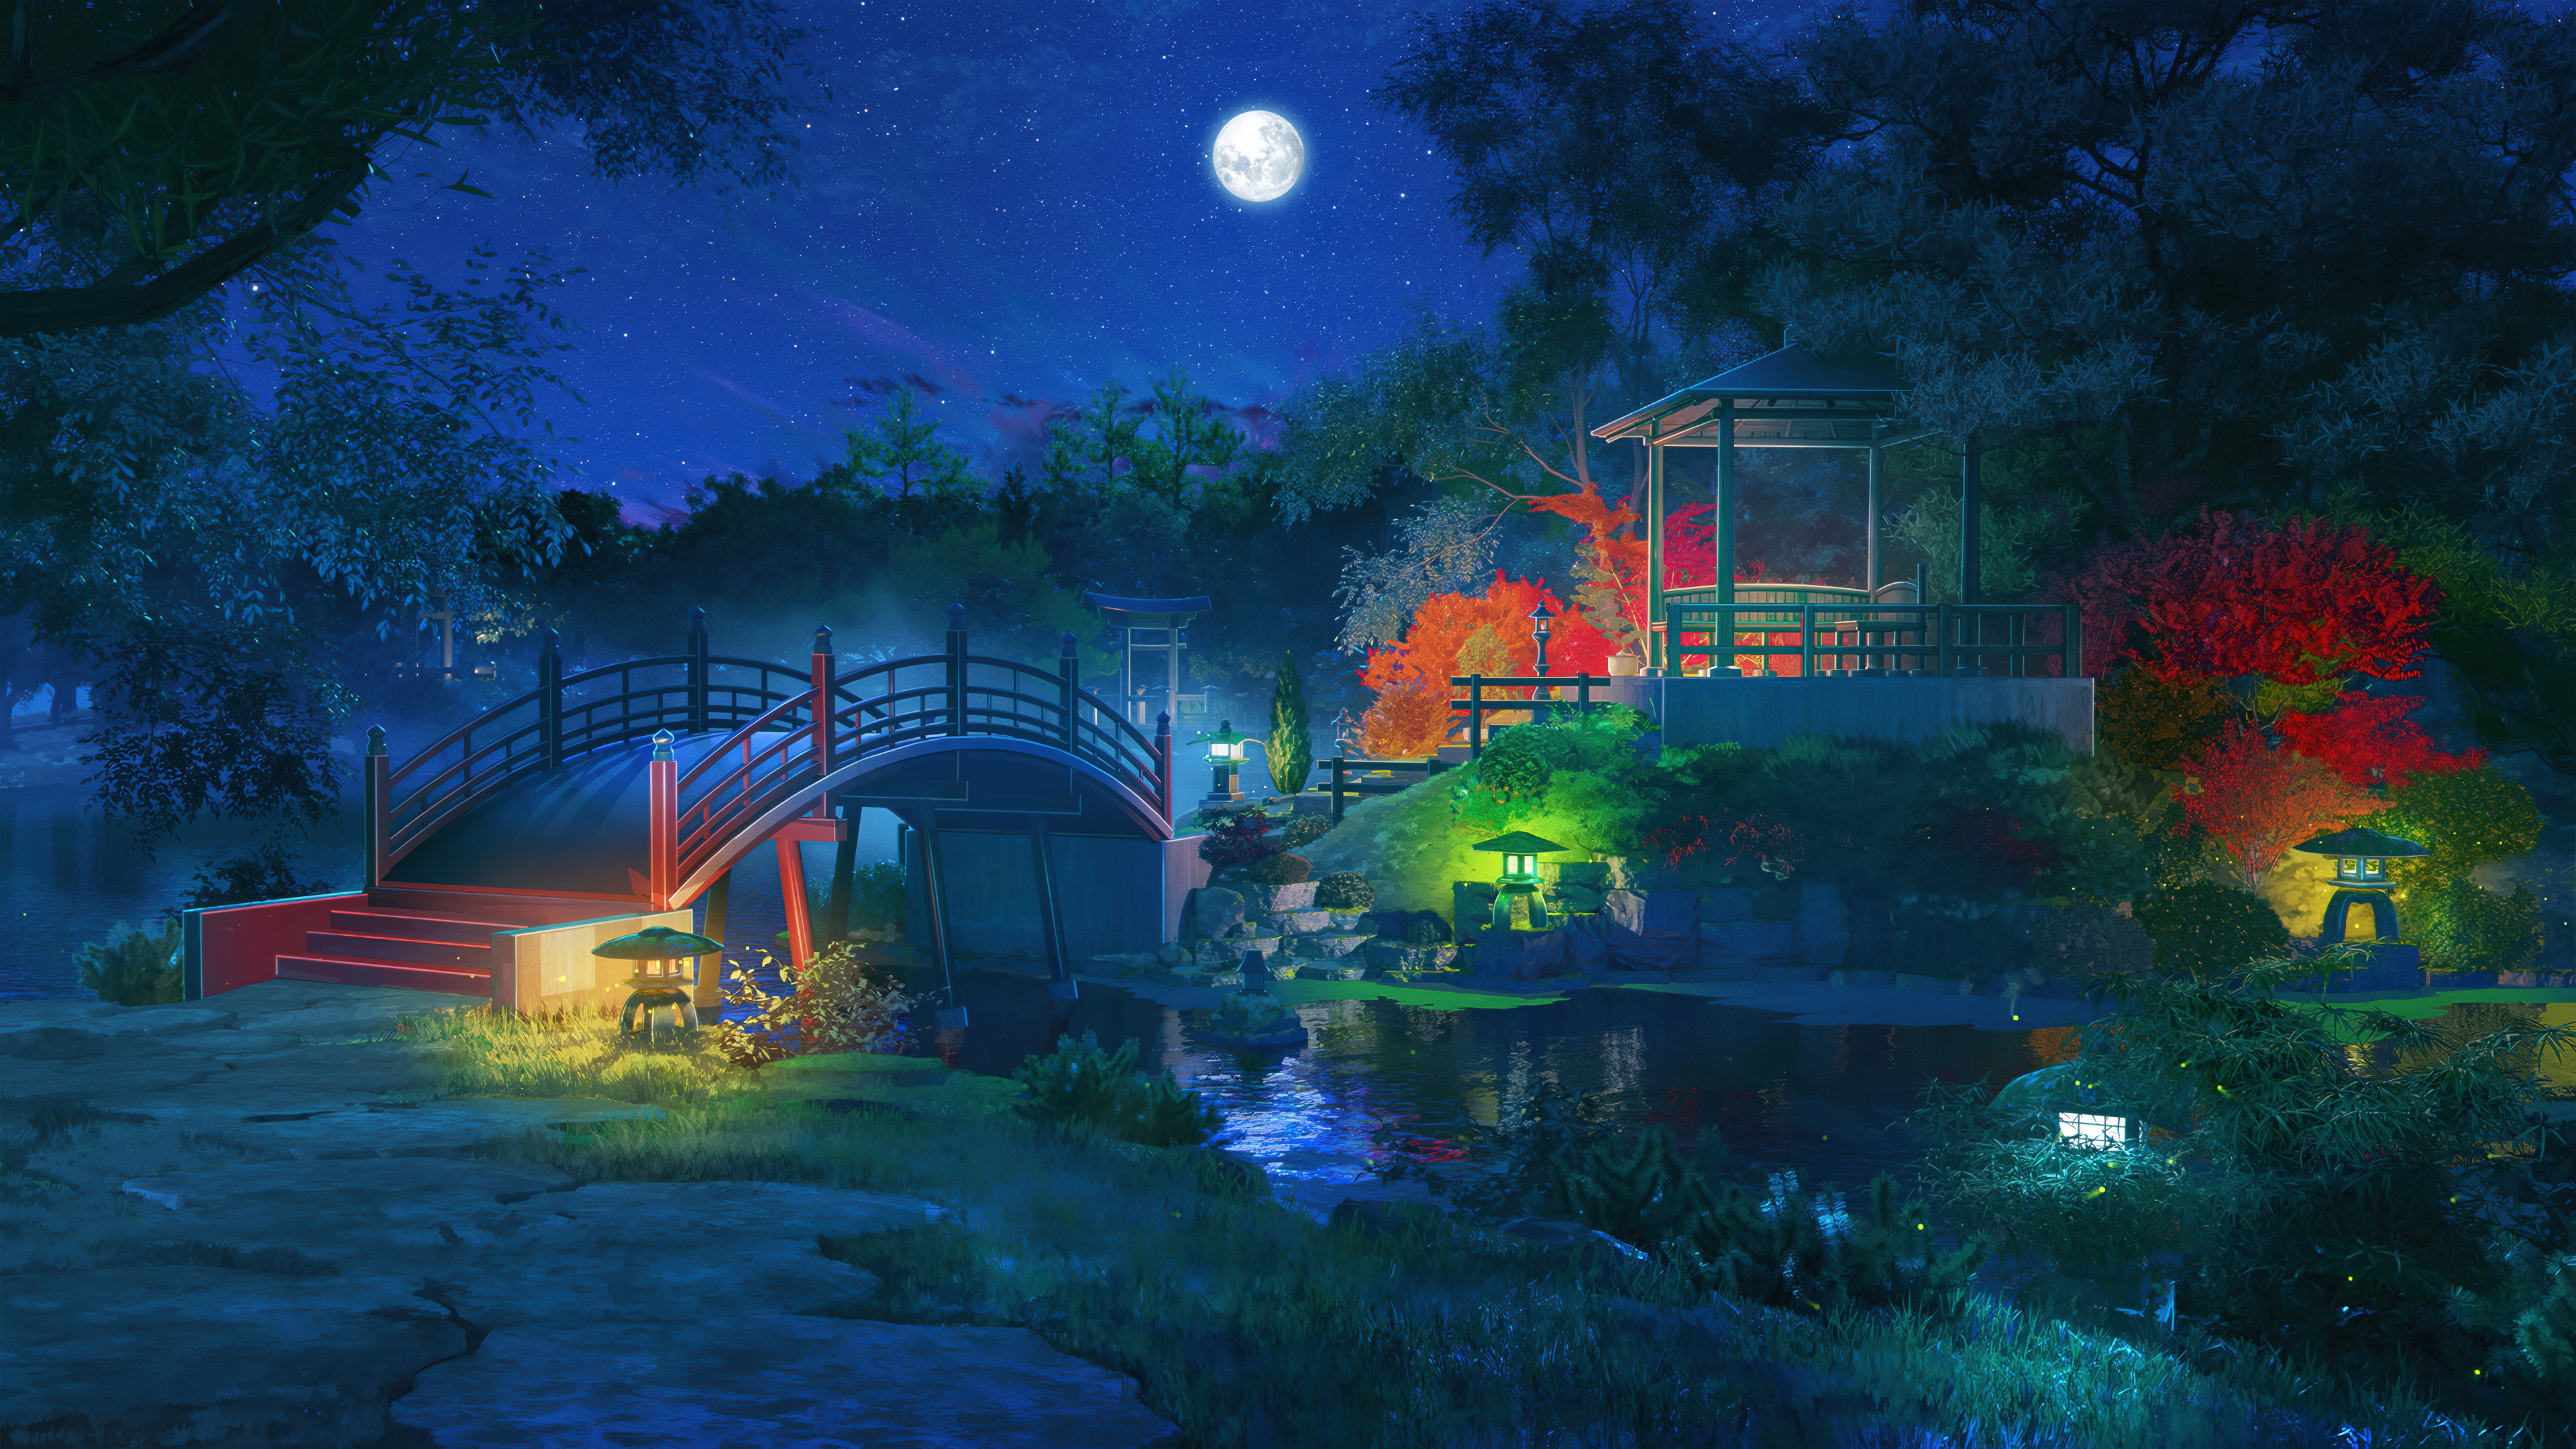 General 3840x2160 digital art artwork illustration night nightscape Moon stars starred sky bridge forest nature river water trees 4K Japan